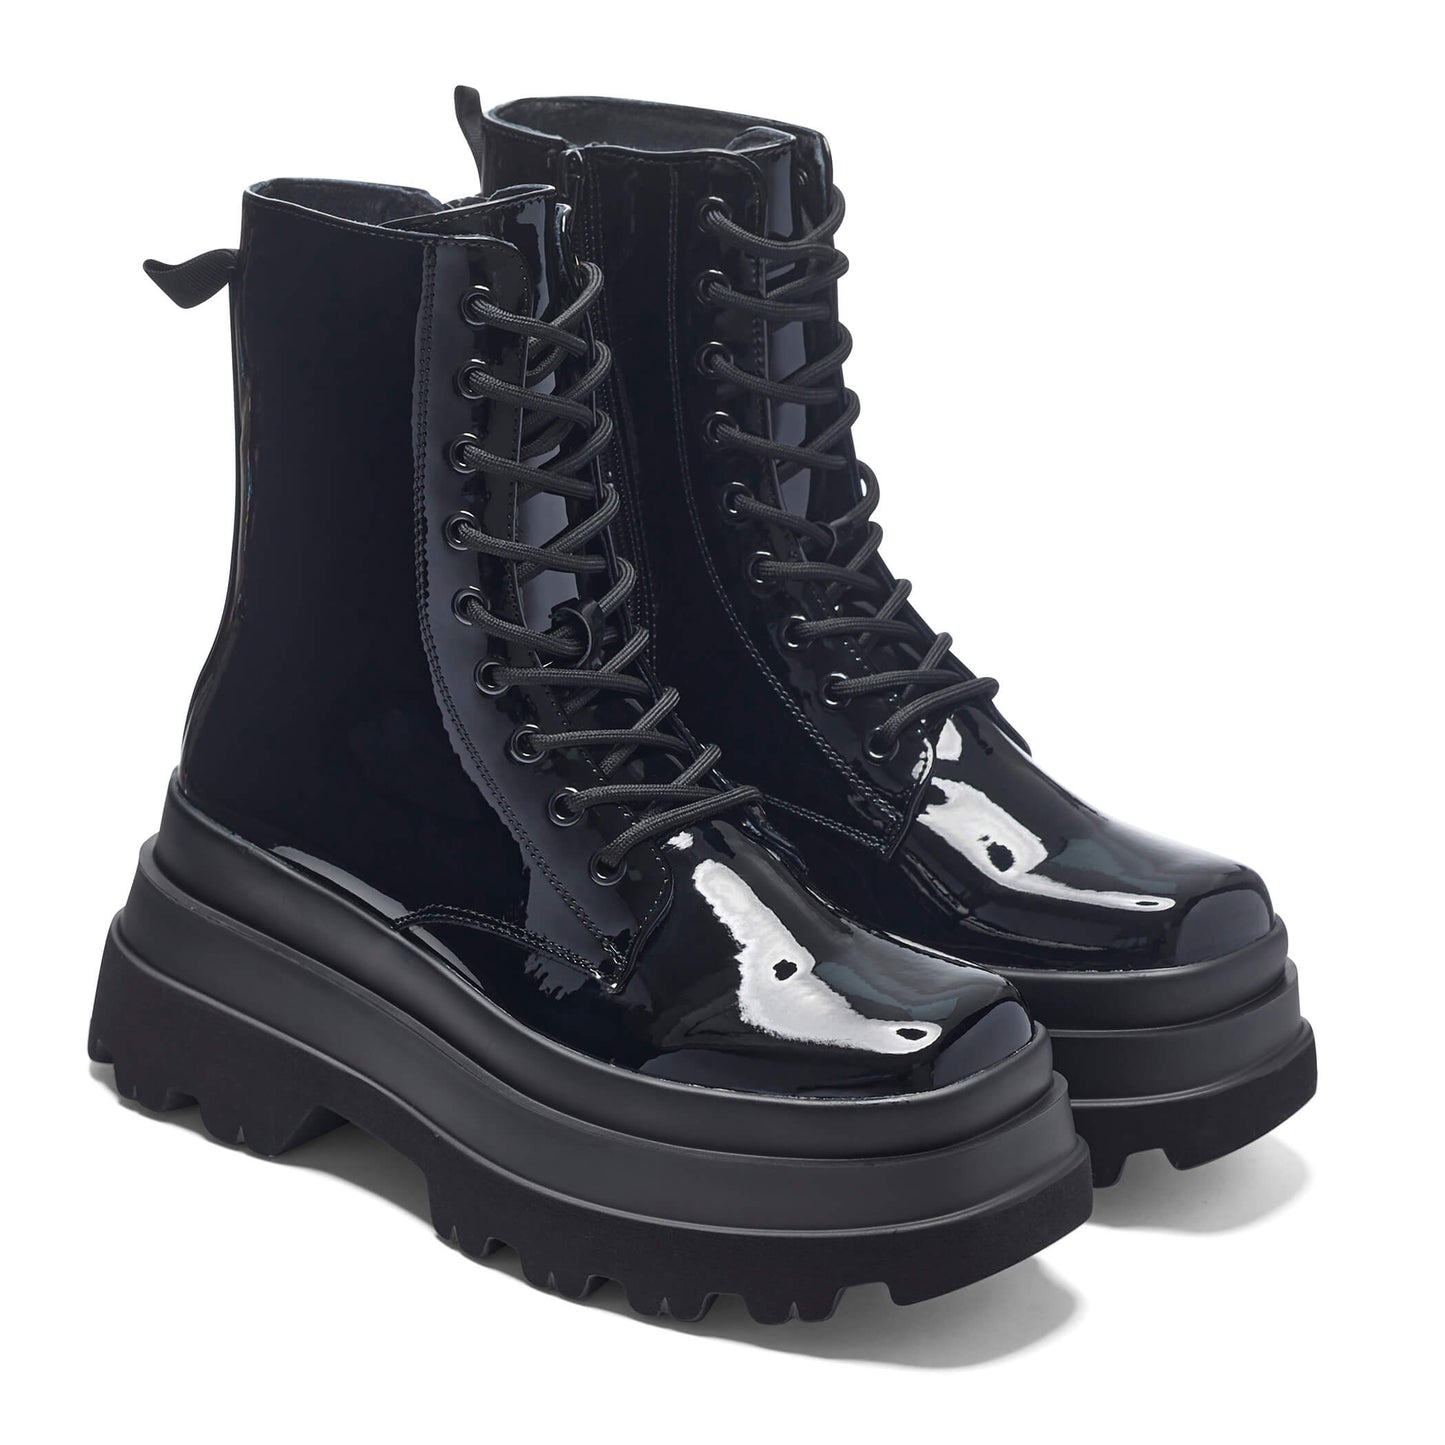 Deathwatch Trident Patent Platform Boots - Ankle Boots - KOI Footwear - Black - Three-Quarter View